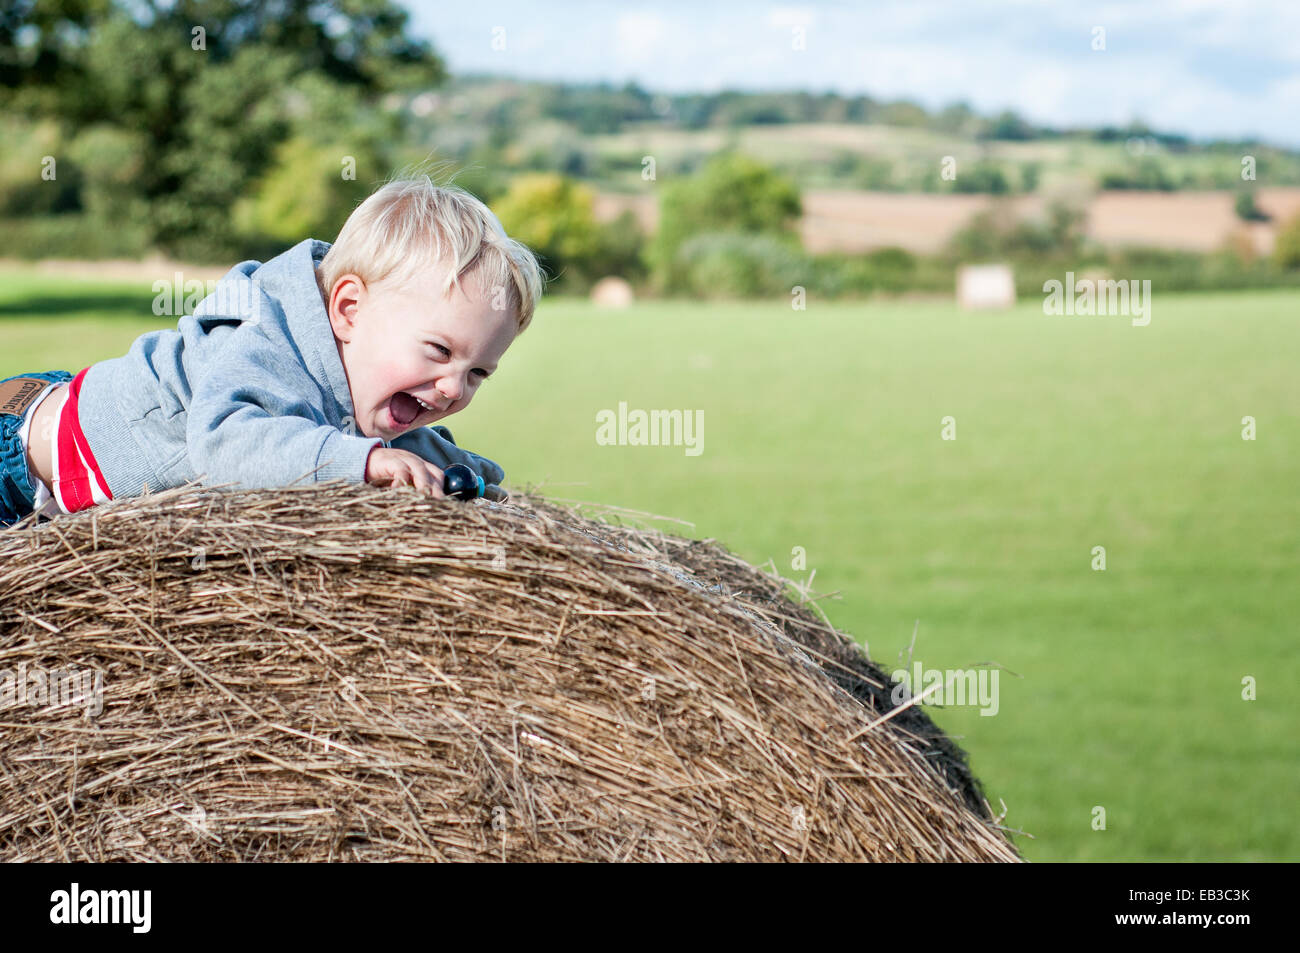 Junge kriecht auf Heu Ballen lachen Stockfoto